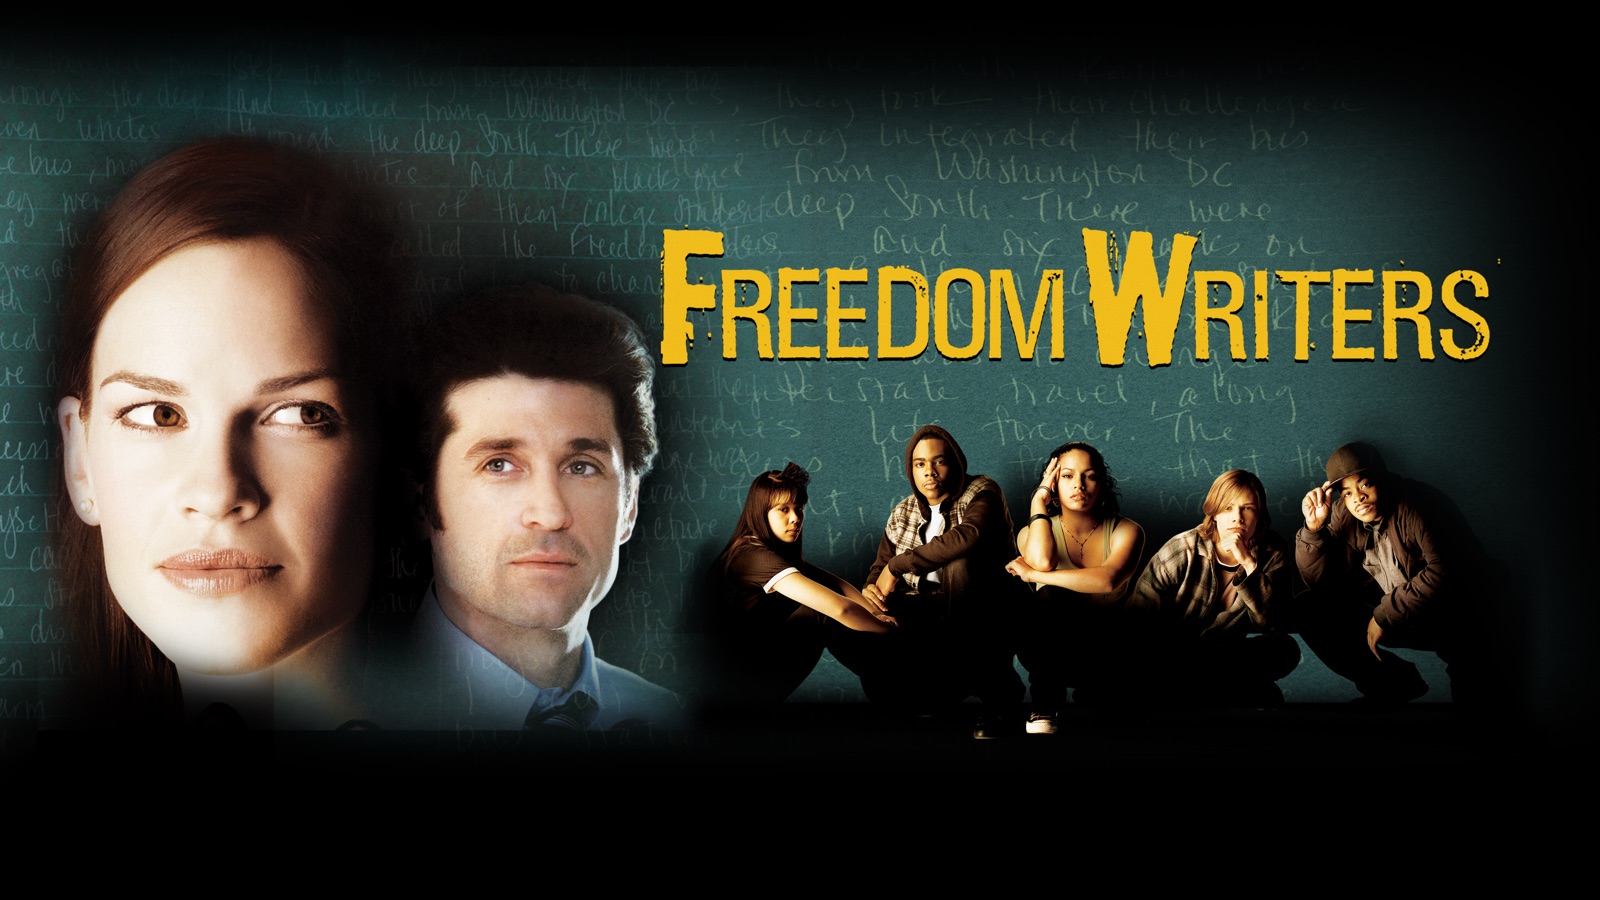 freedom writers cast brian gelford